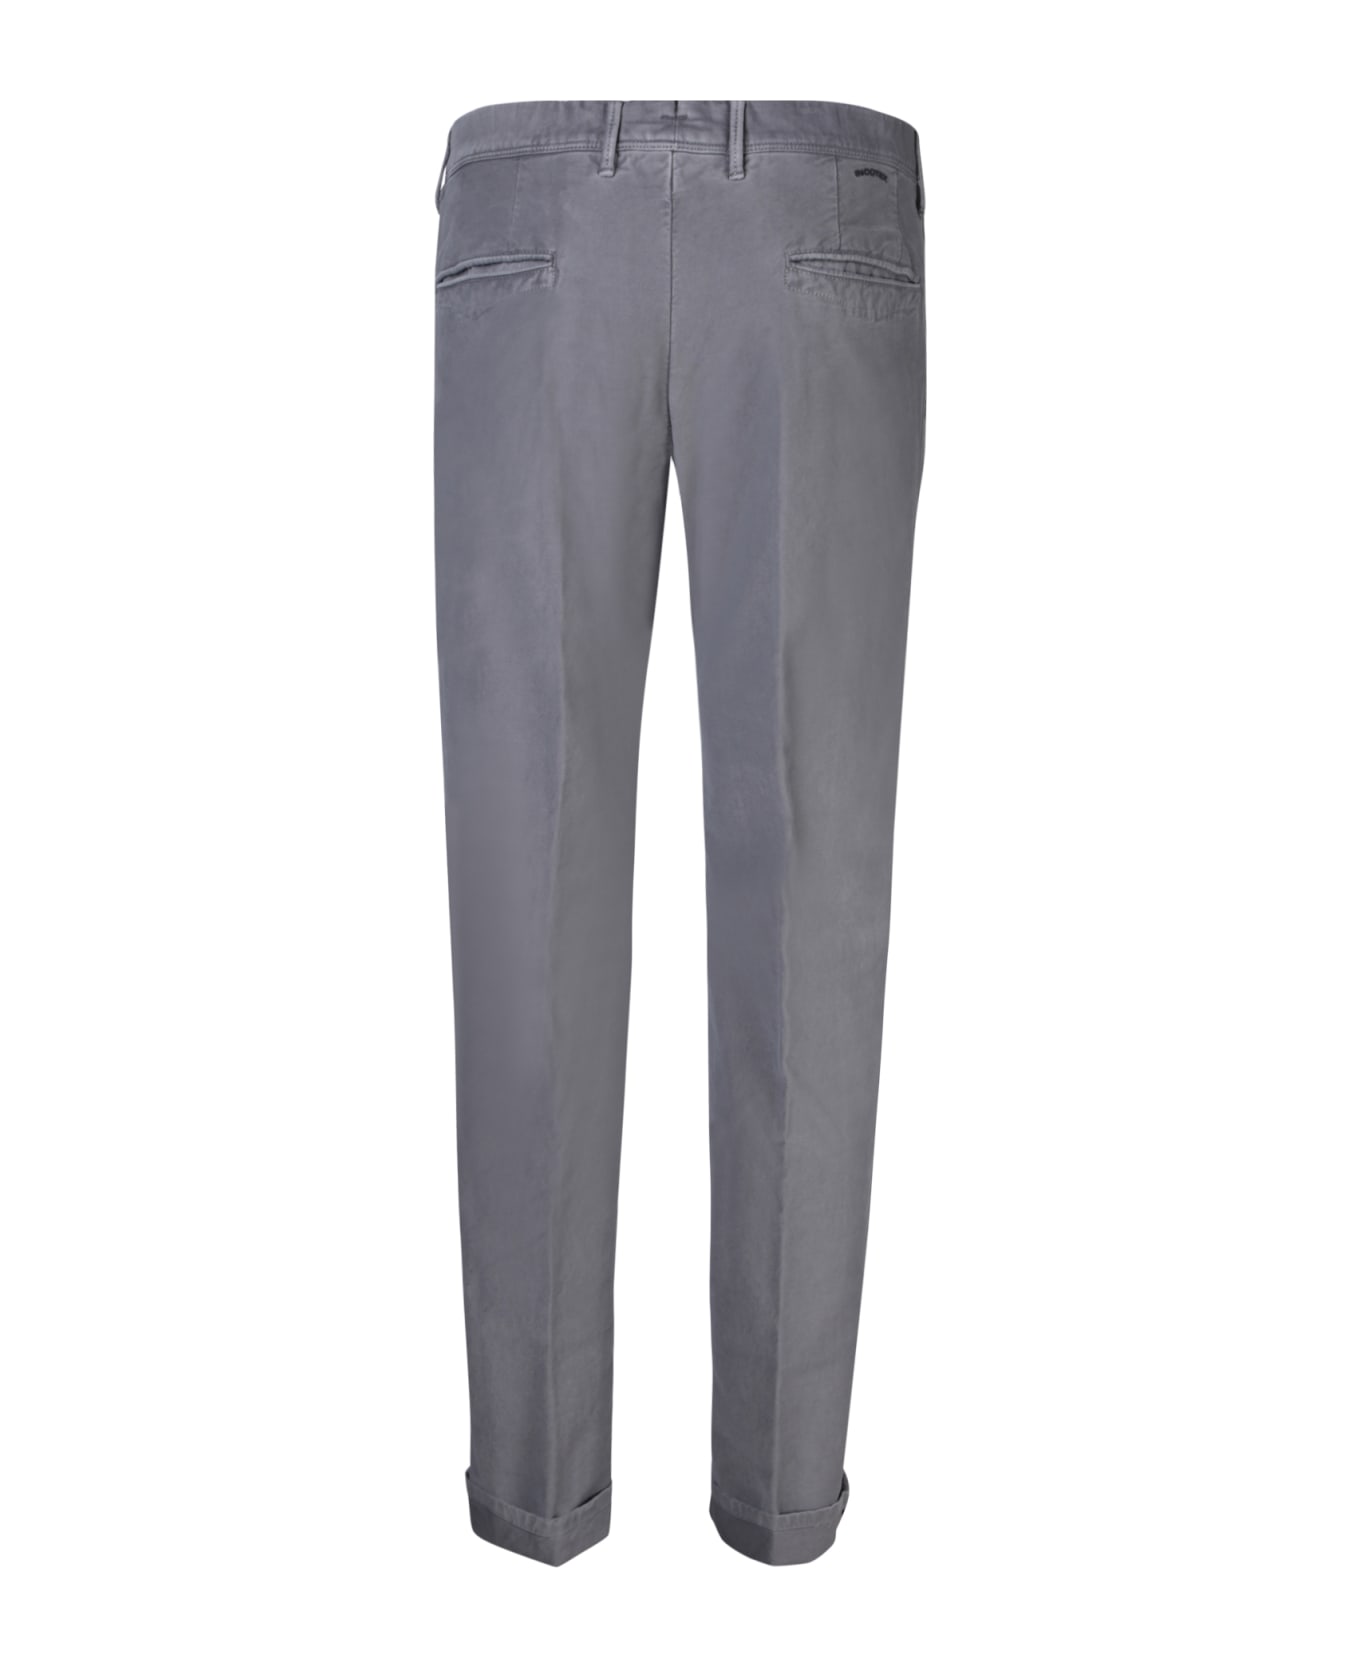 Incotex Cotton Grey Trousers - Grey